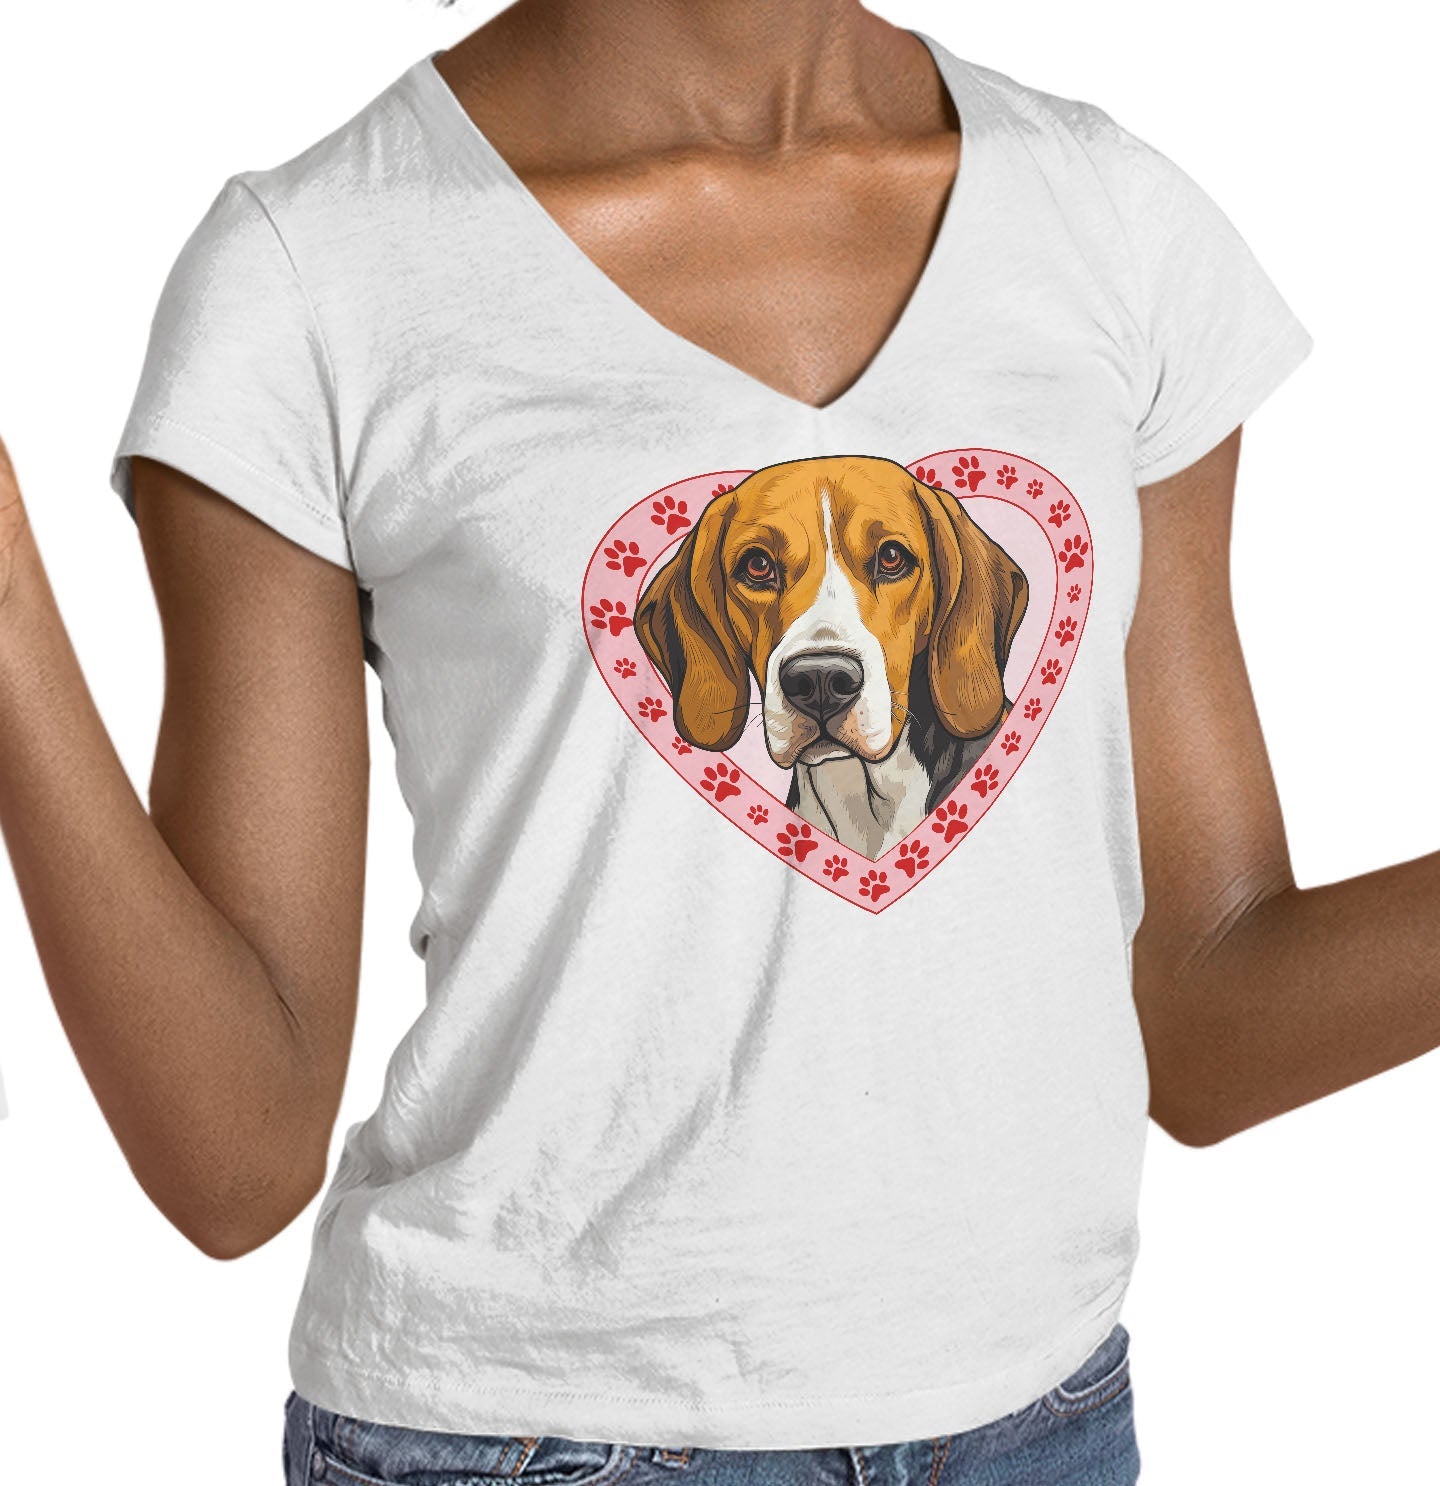 English Foxhound Illustration In Heart - Women's V-Neck T-Shirt